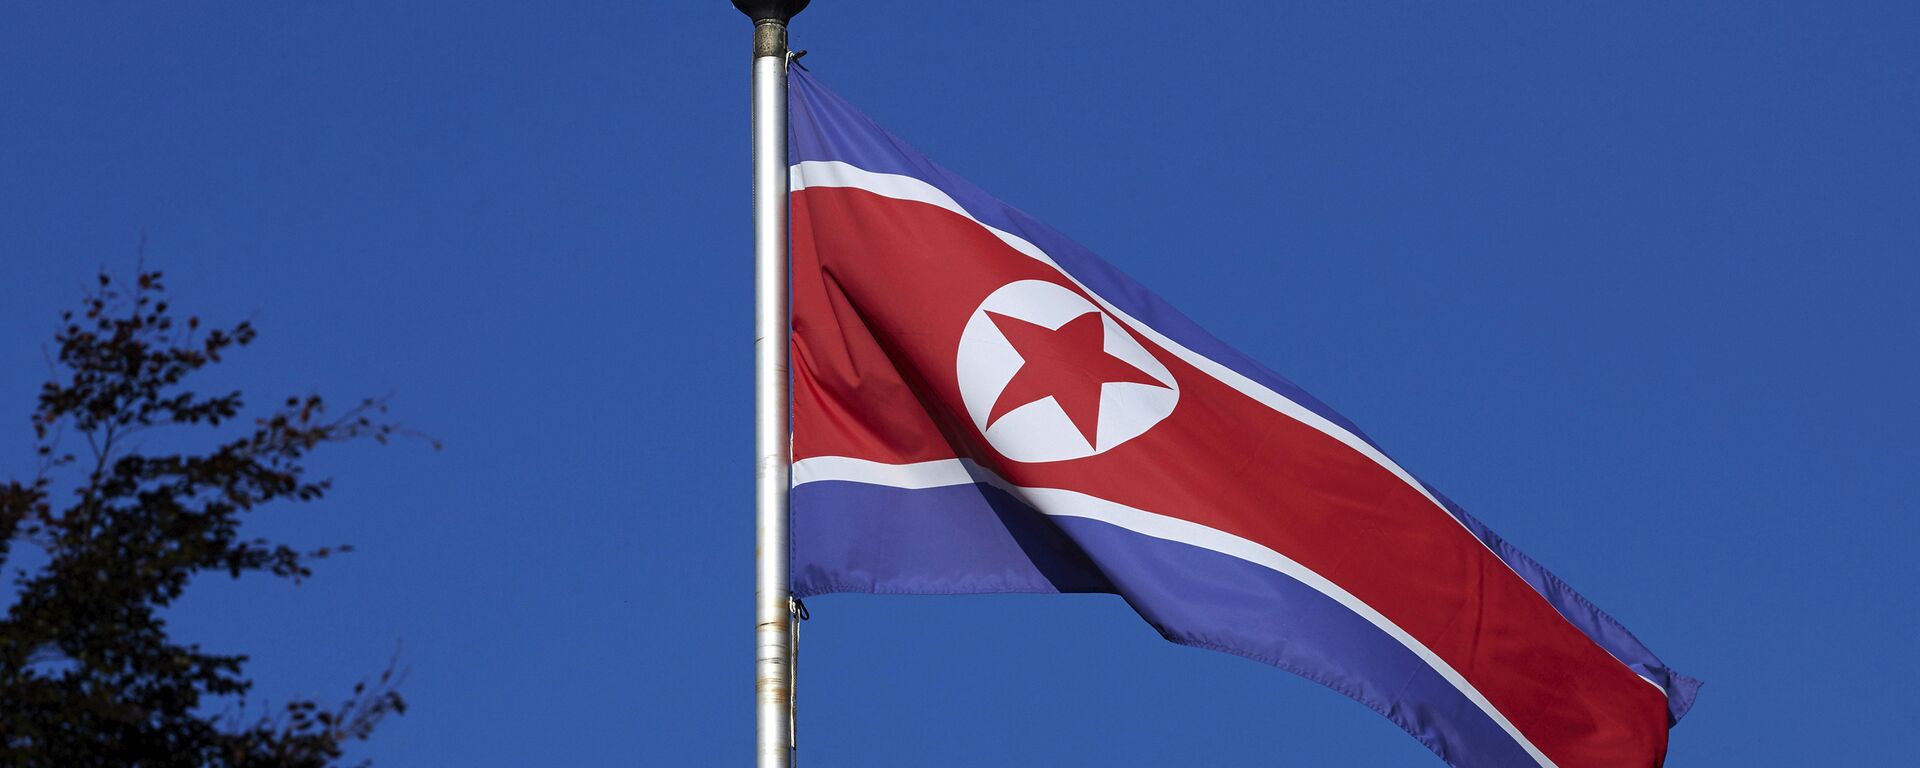 Bandera de Corea del Norte - Sputnik Mundo, 1920, 03.10.2021